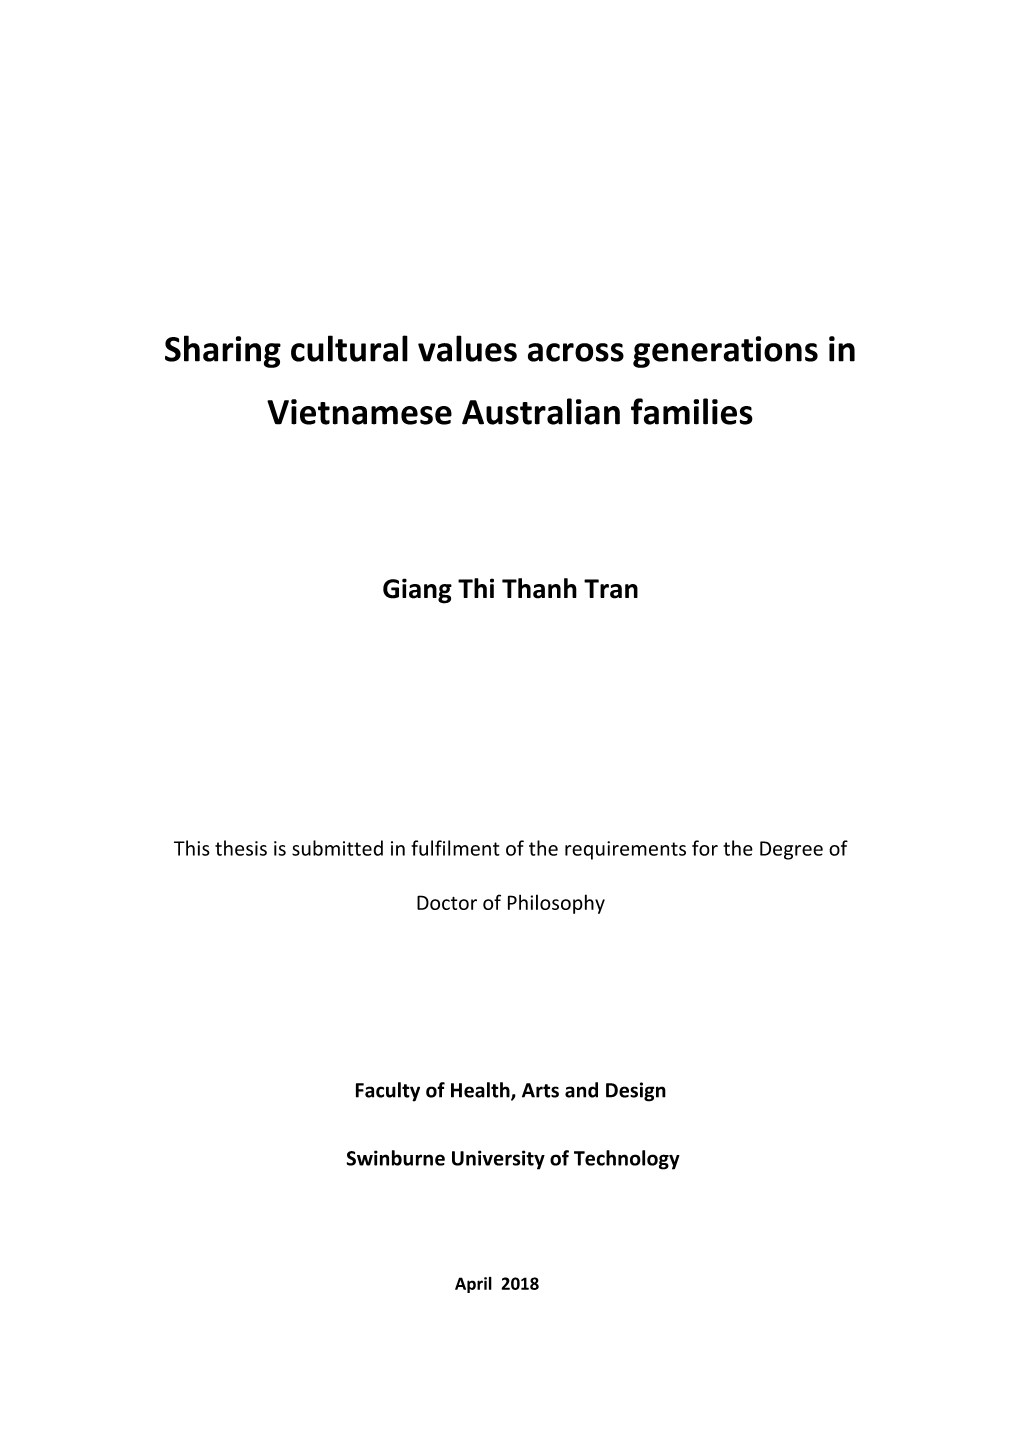 Sharing Cultural Values Across Generations in Vietnamese Australian Families